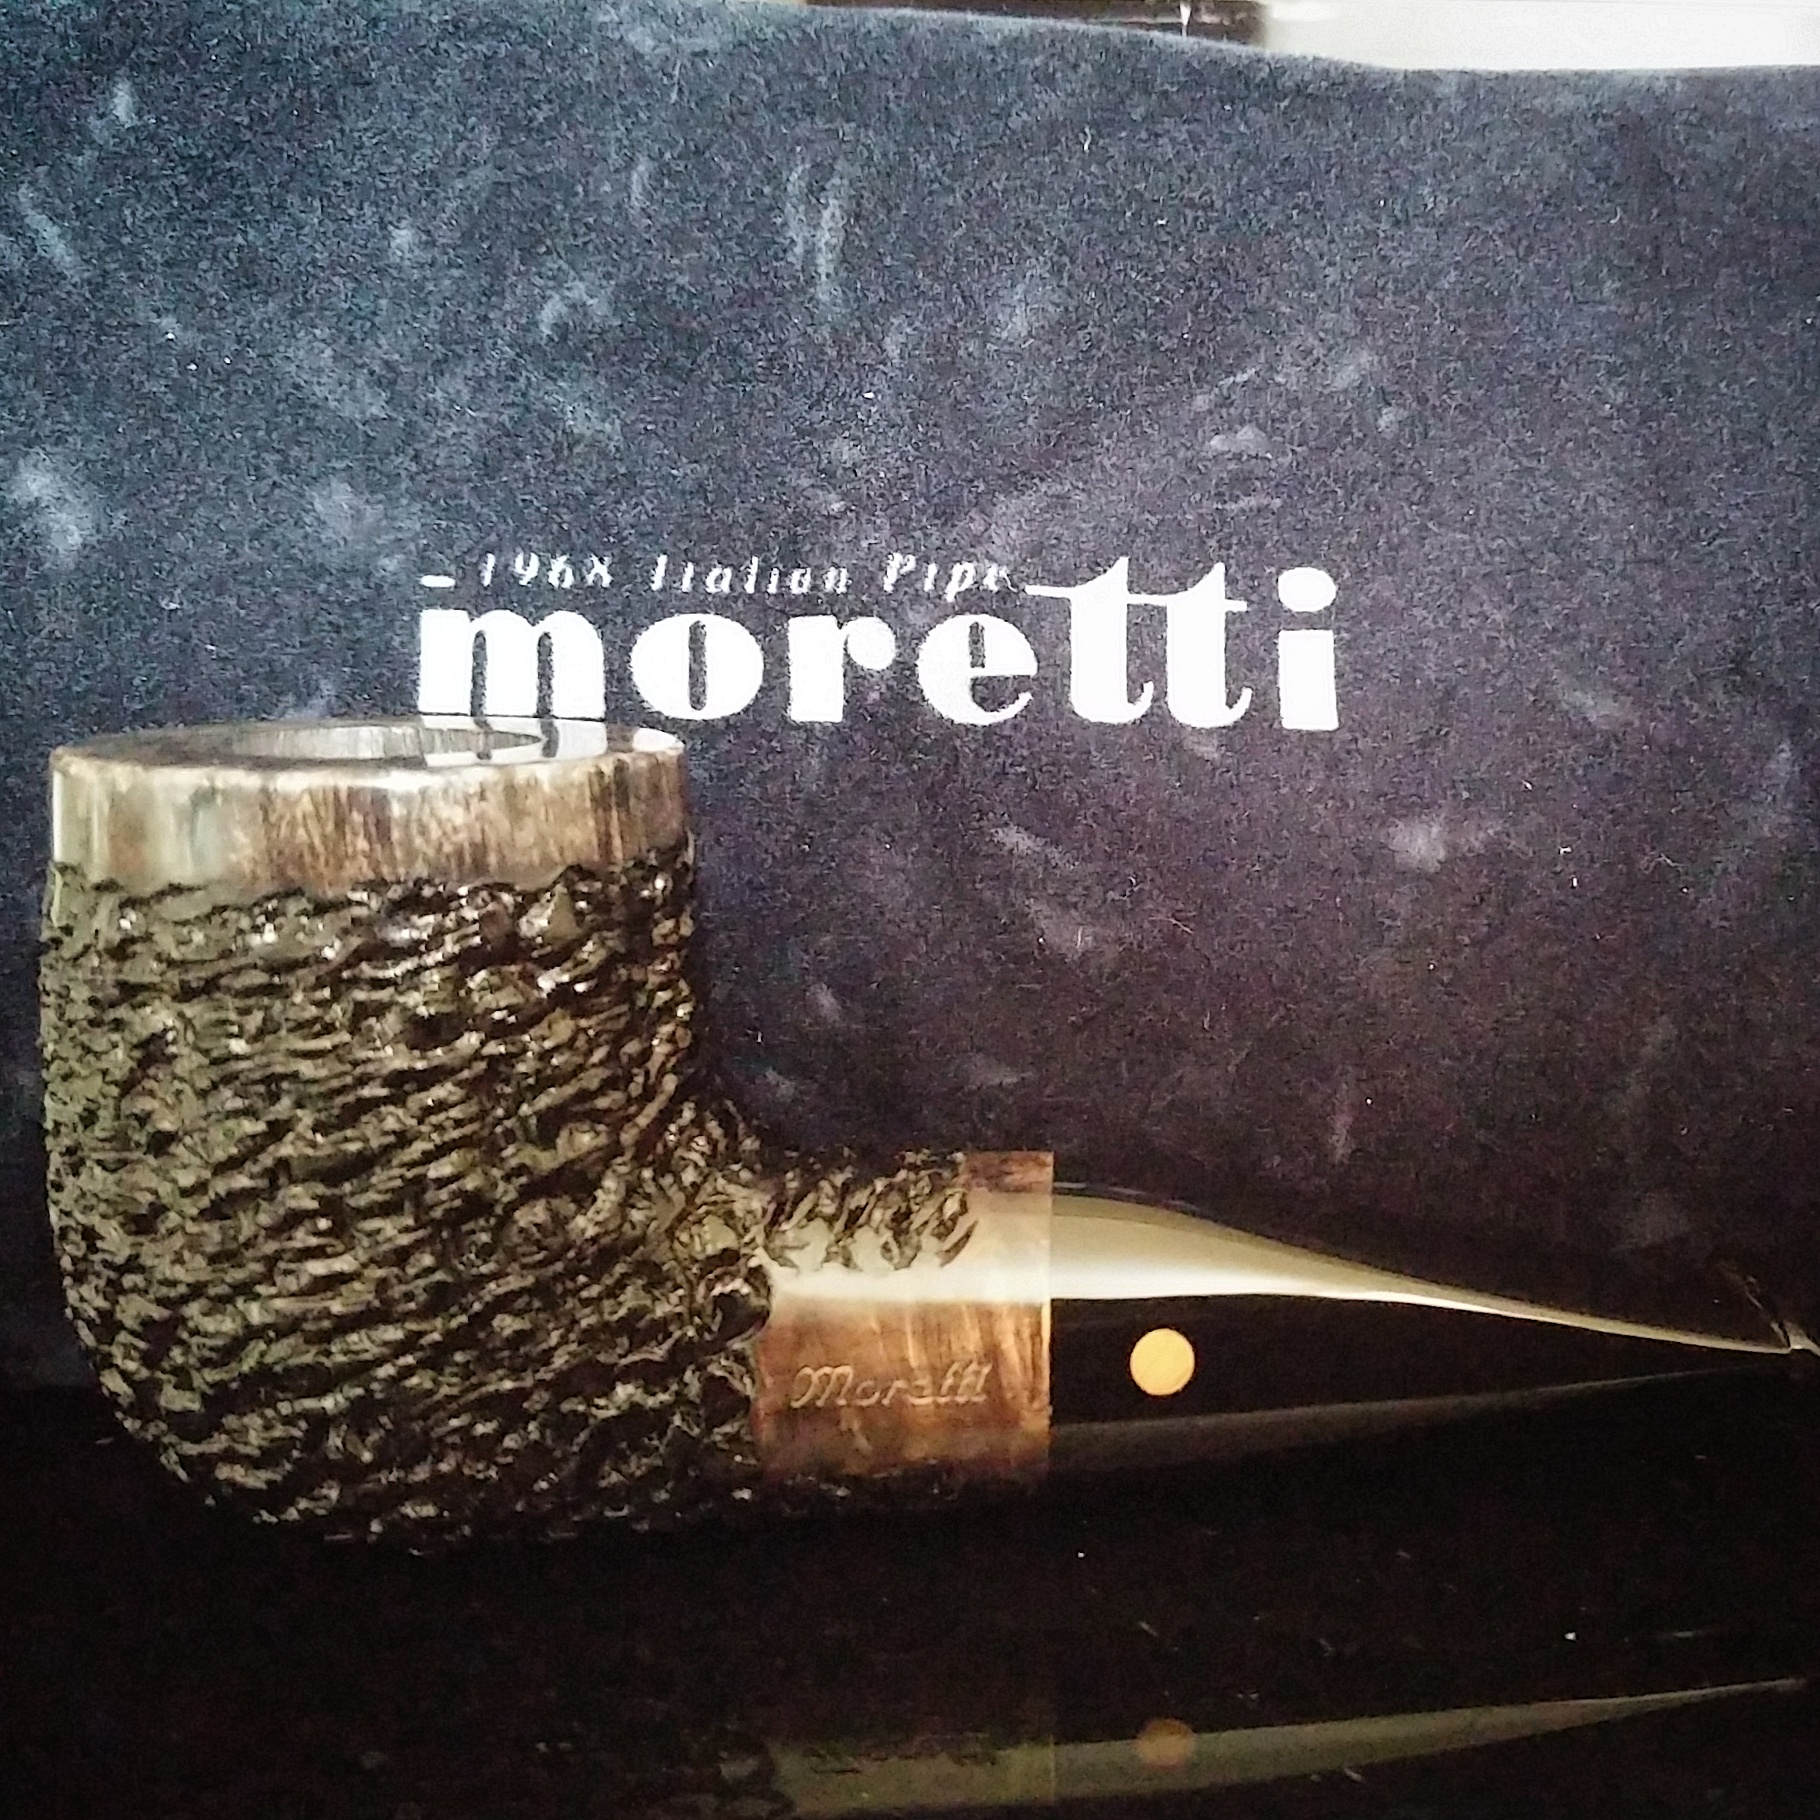 Moretti Stubby Billiard Nose Warmer.jpg